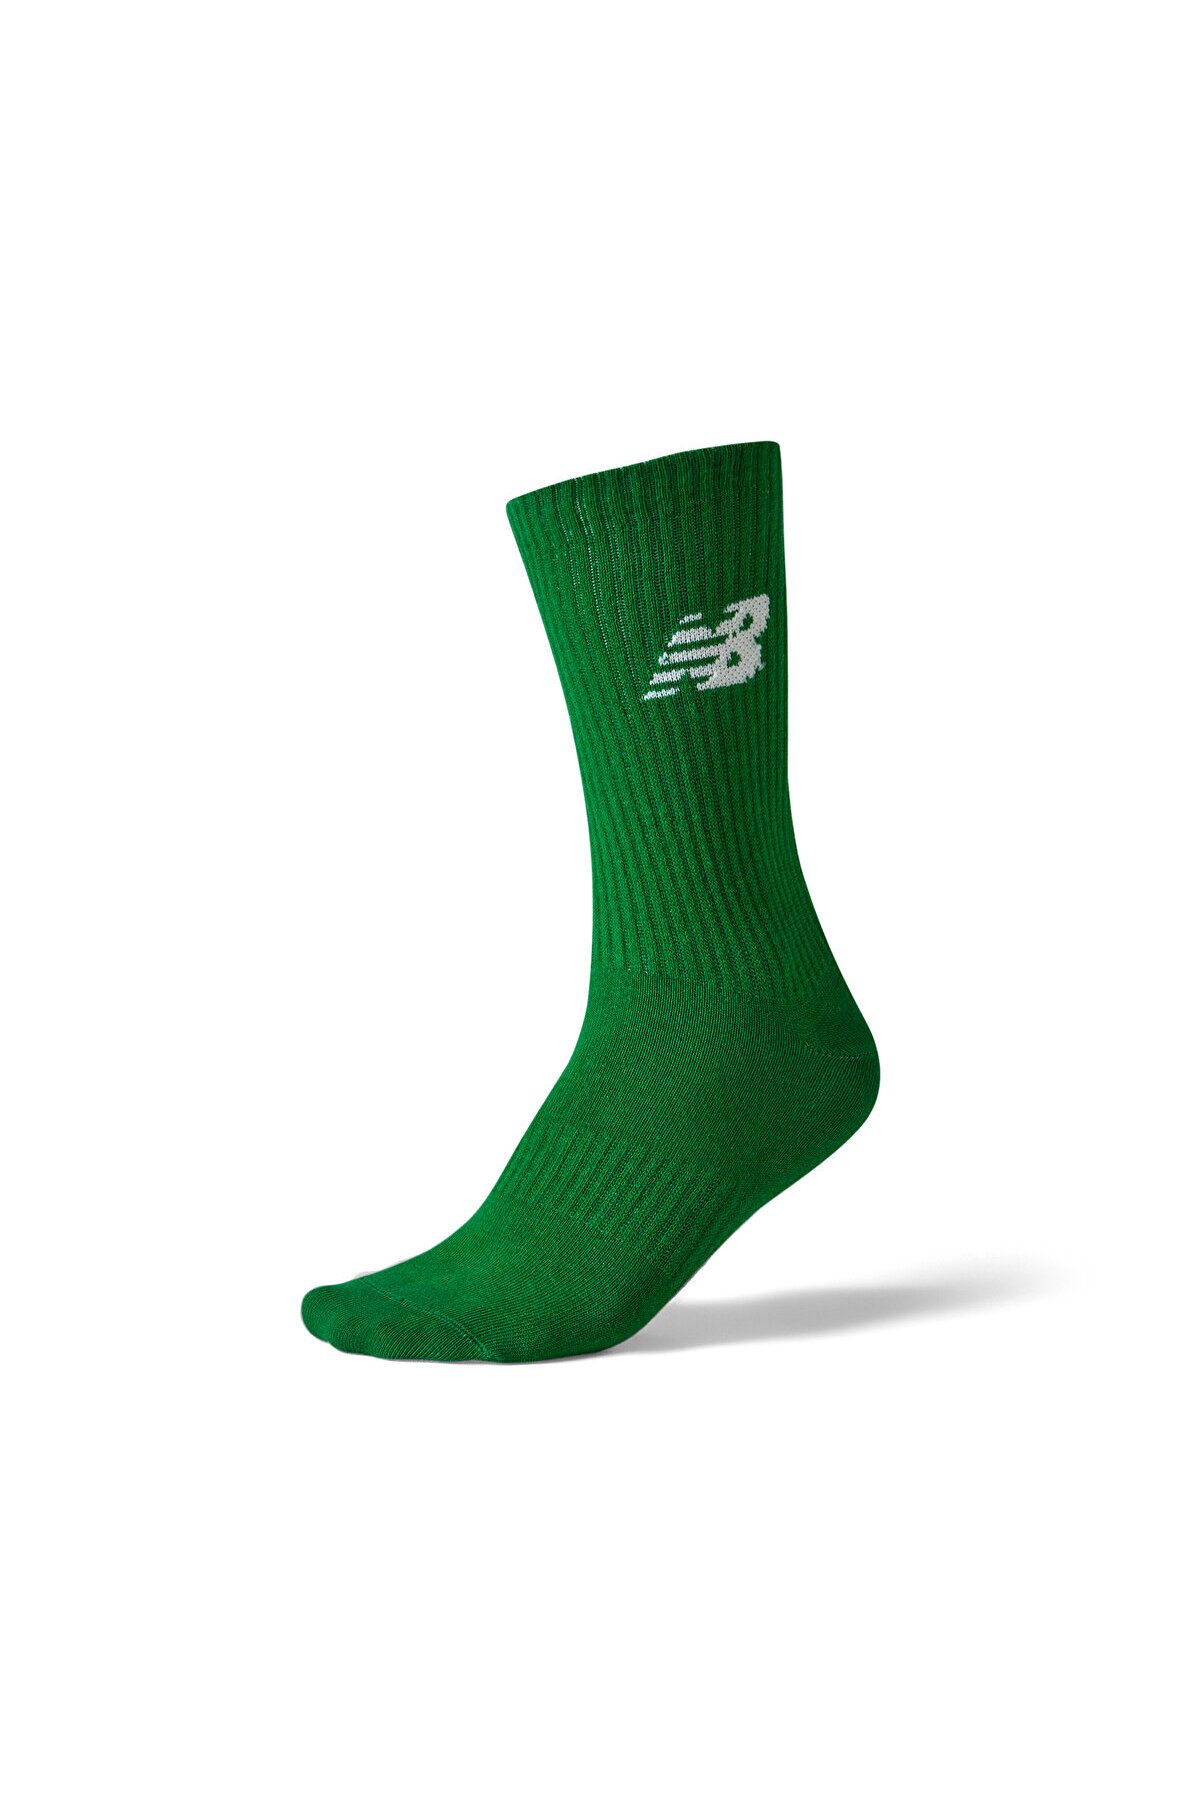 New Balance Nb Lifestyle Socks Unisex Çorap